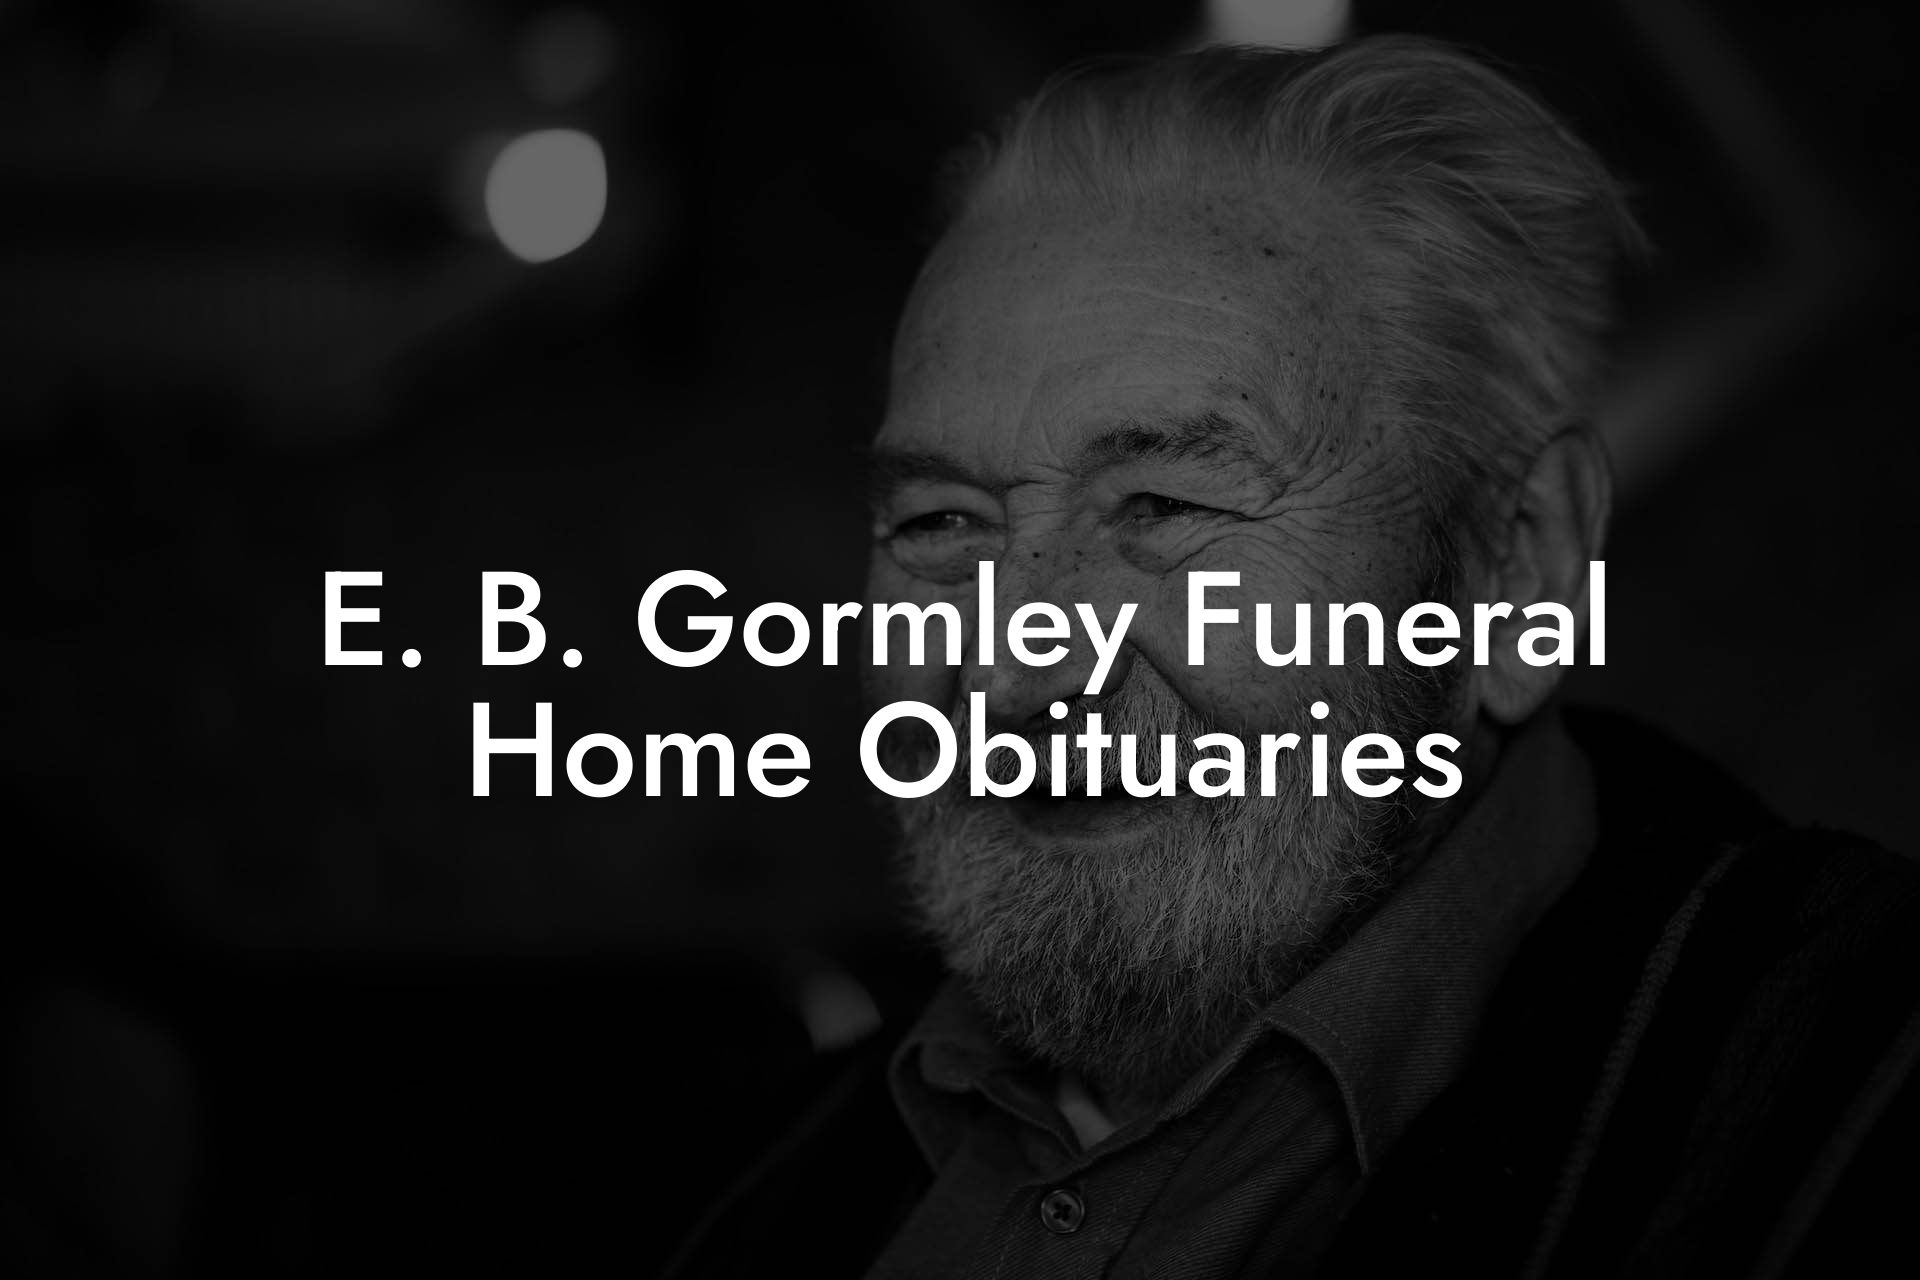 E. B. Gormley Funeral Home Obituaries